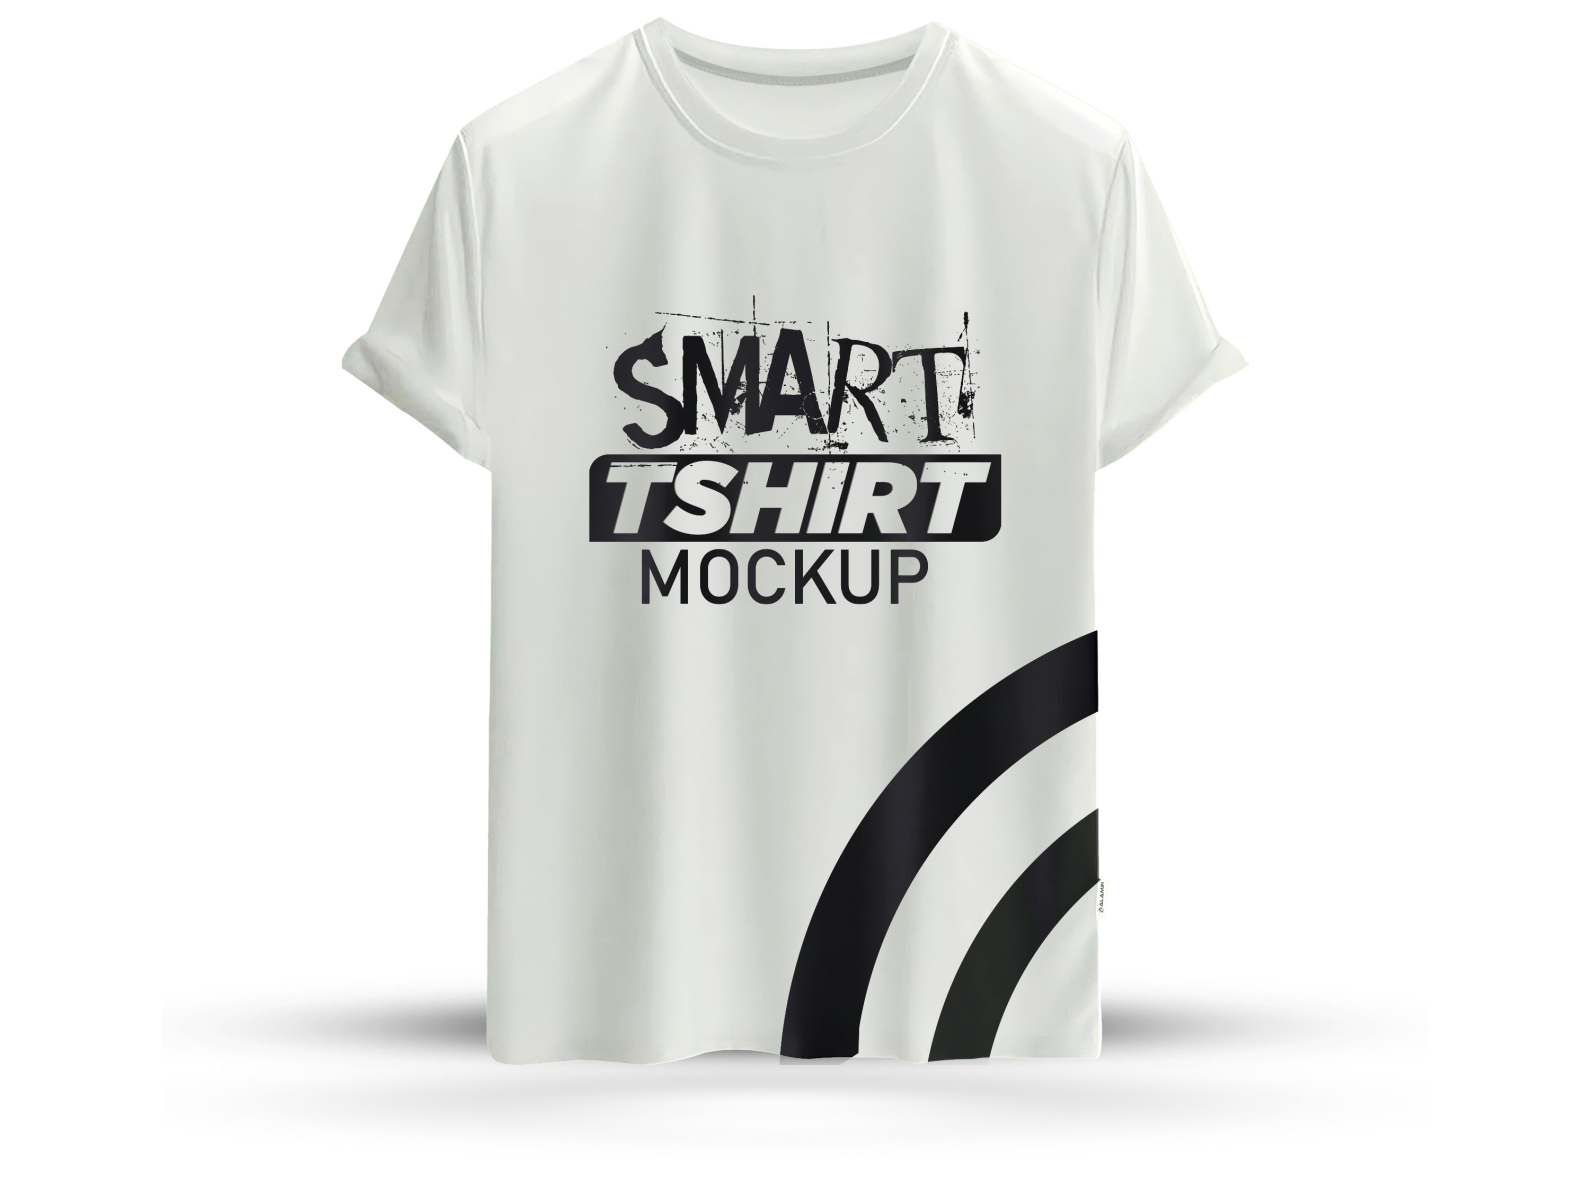 Smart Tshirt Mockup v2 by Alamin Hossain Araf on Dribbble